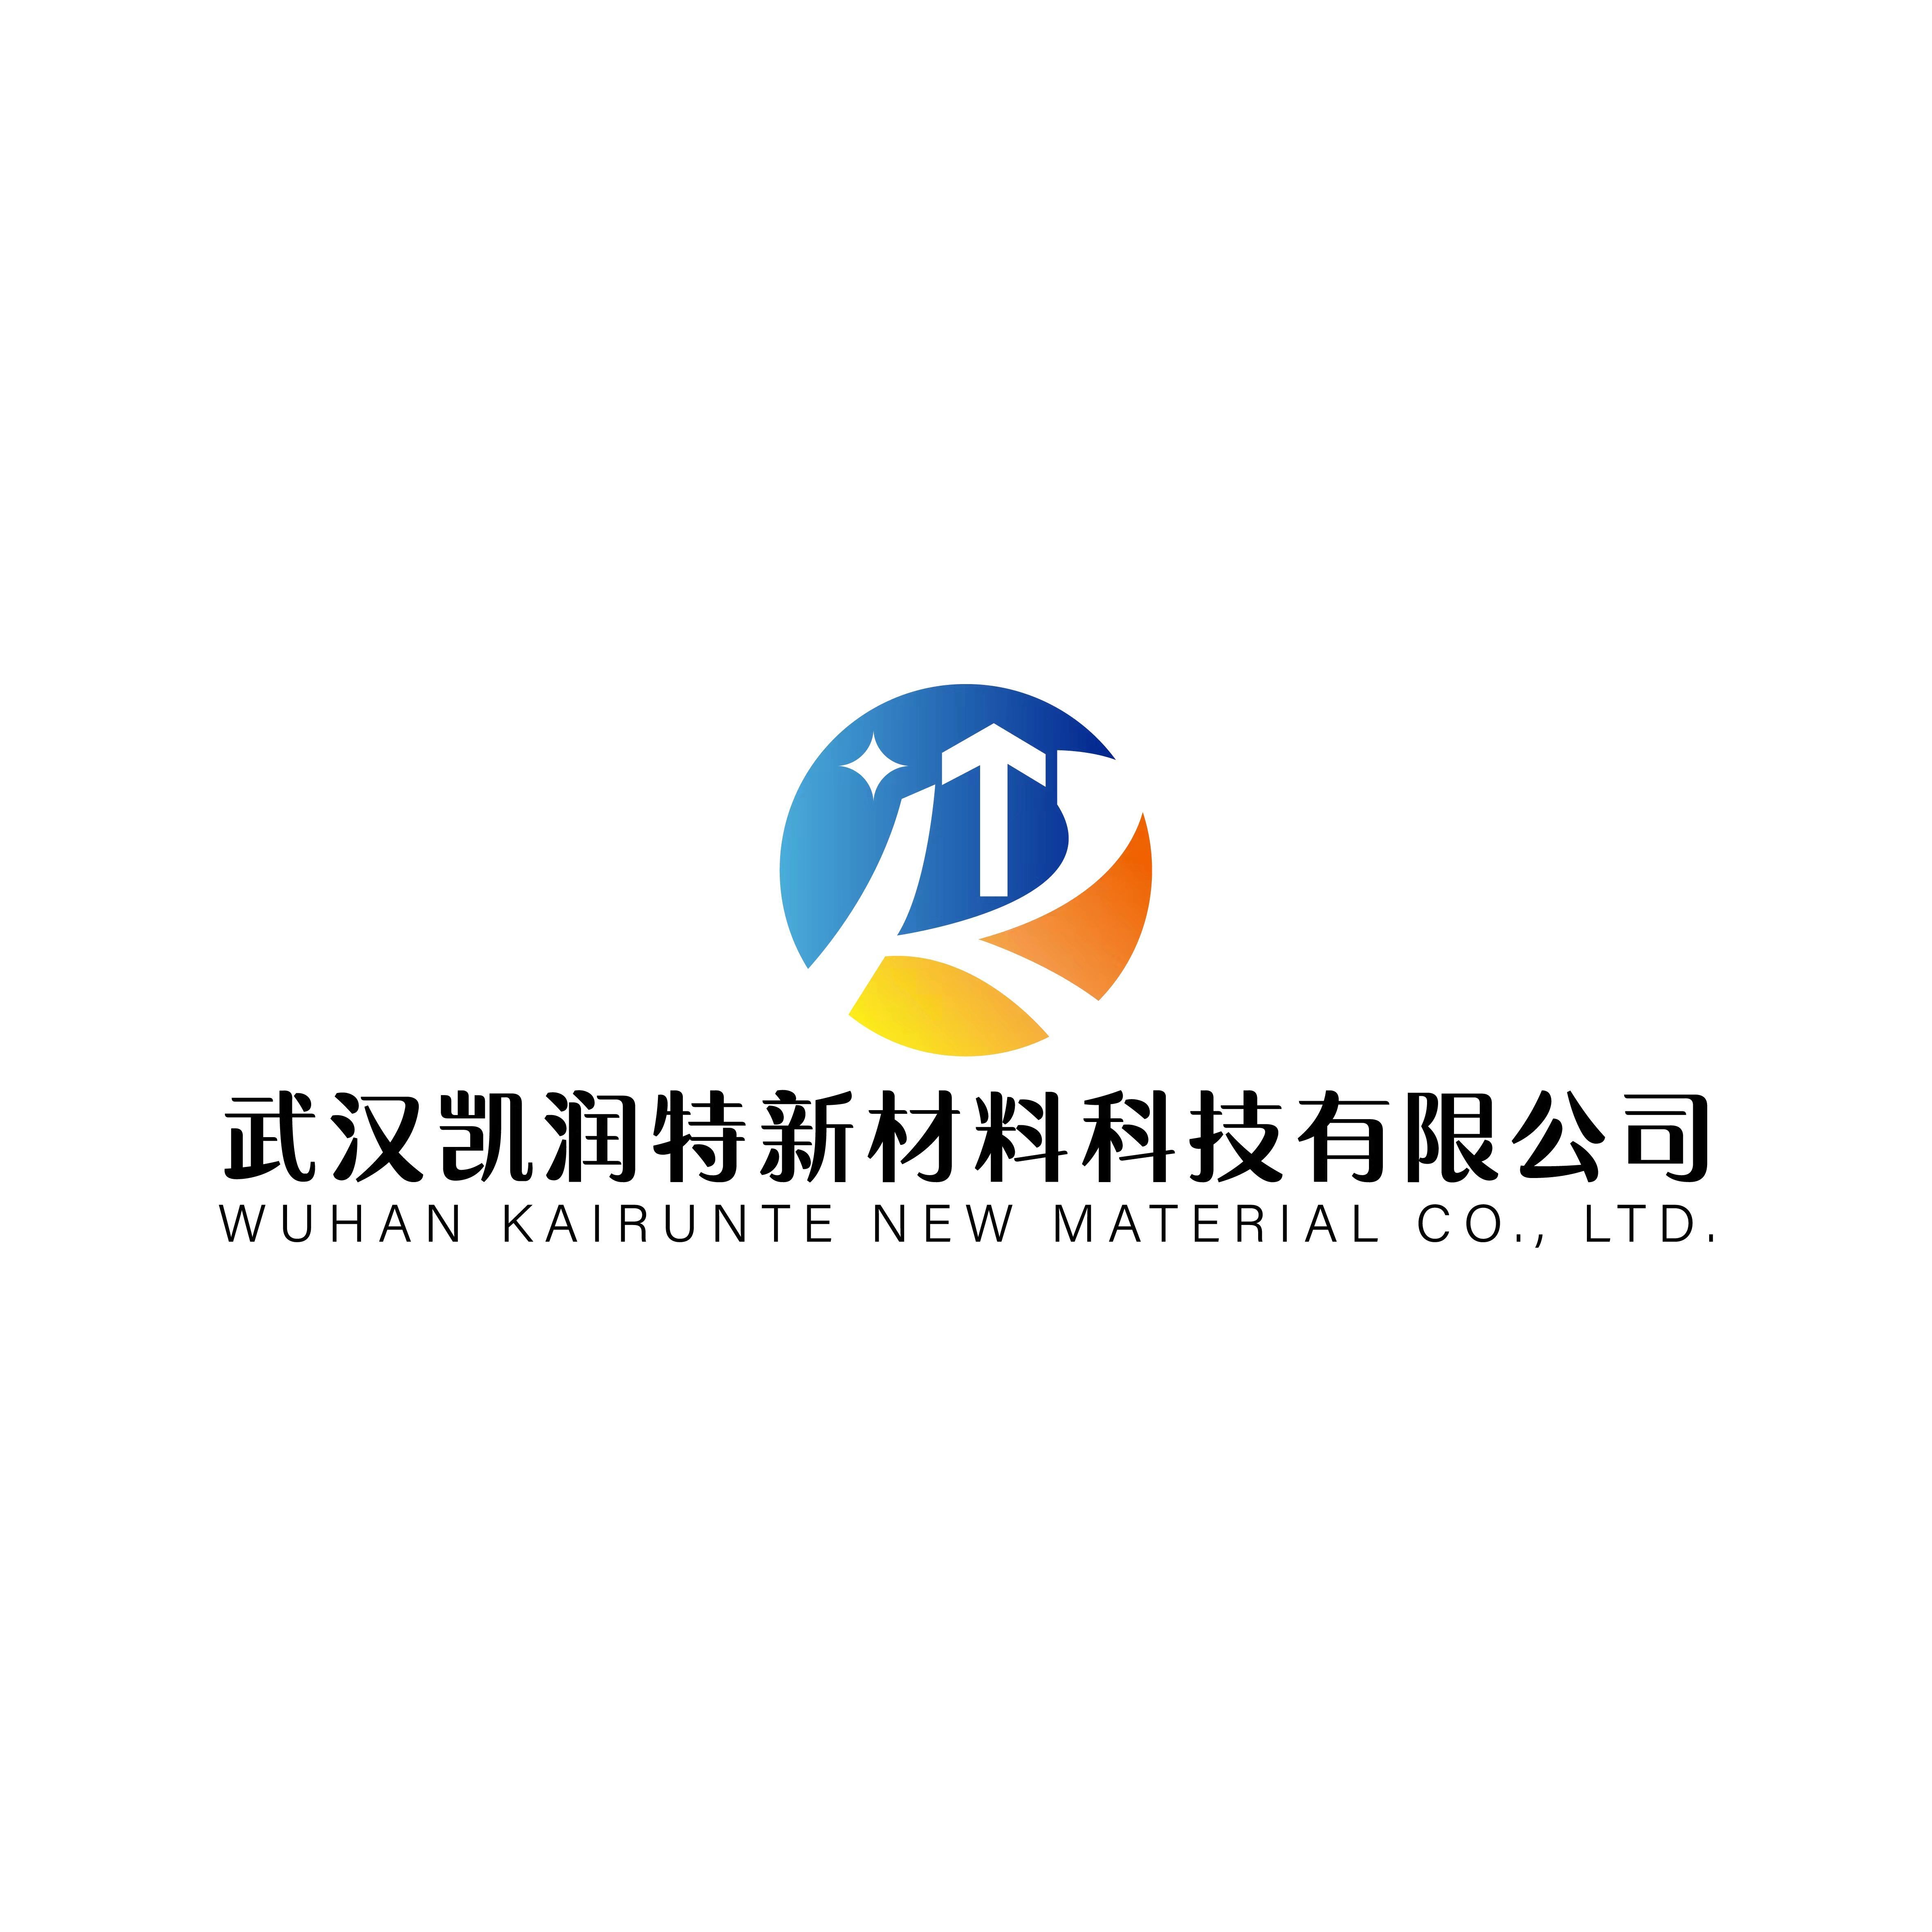 Wuhan Kairunte New Material Com, Ltd